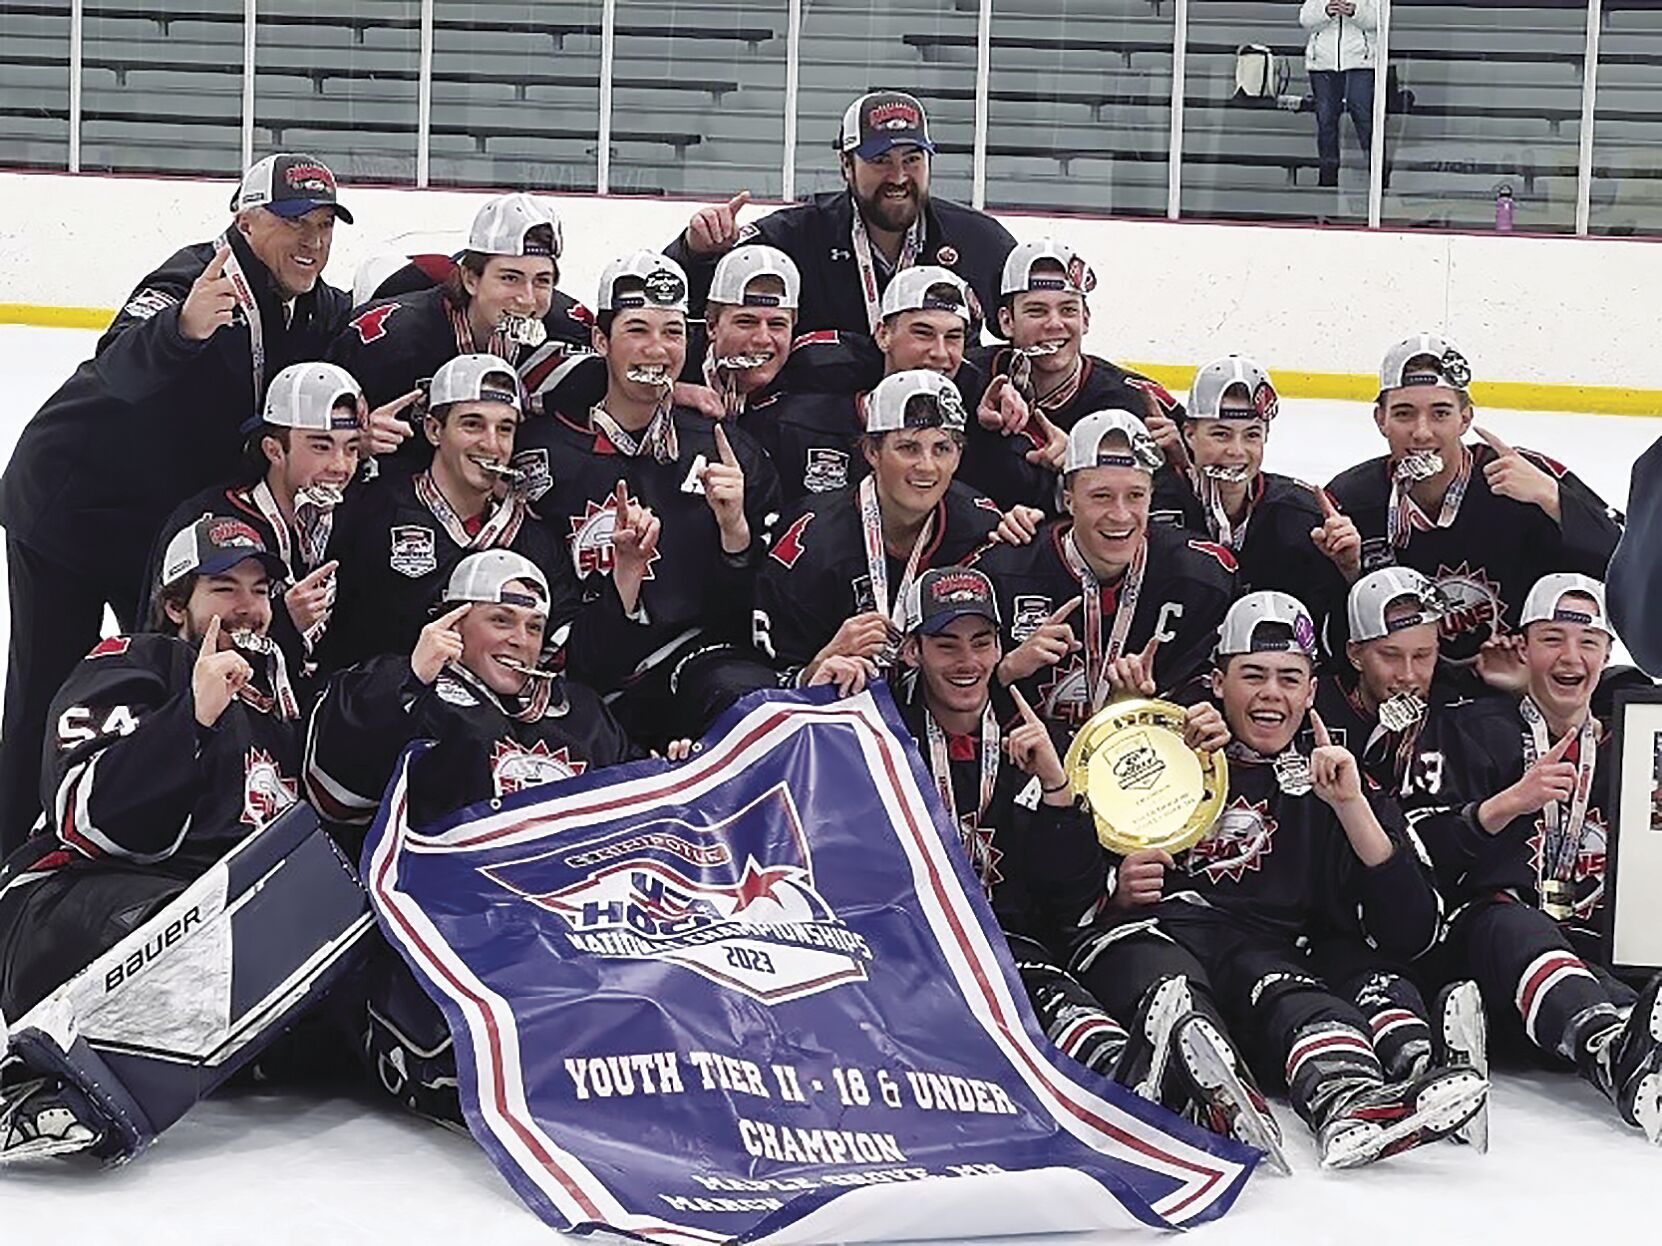 High school Suns win national hockey title in Minnesota High School mtexpress image